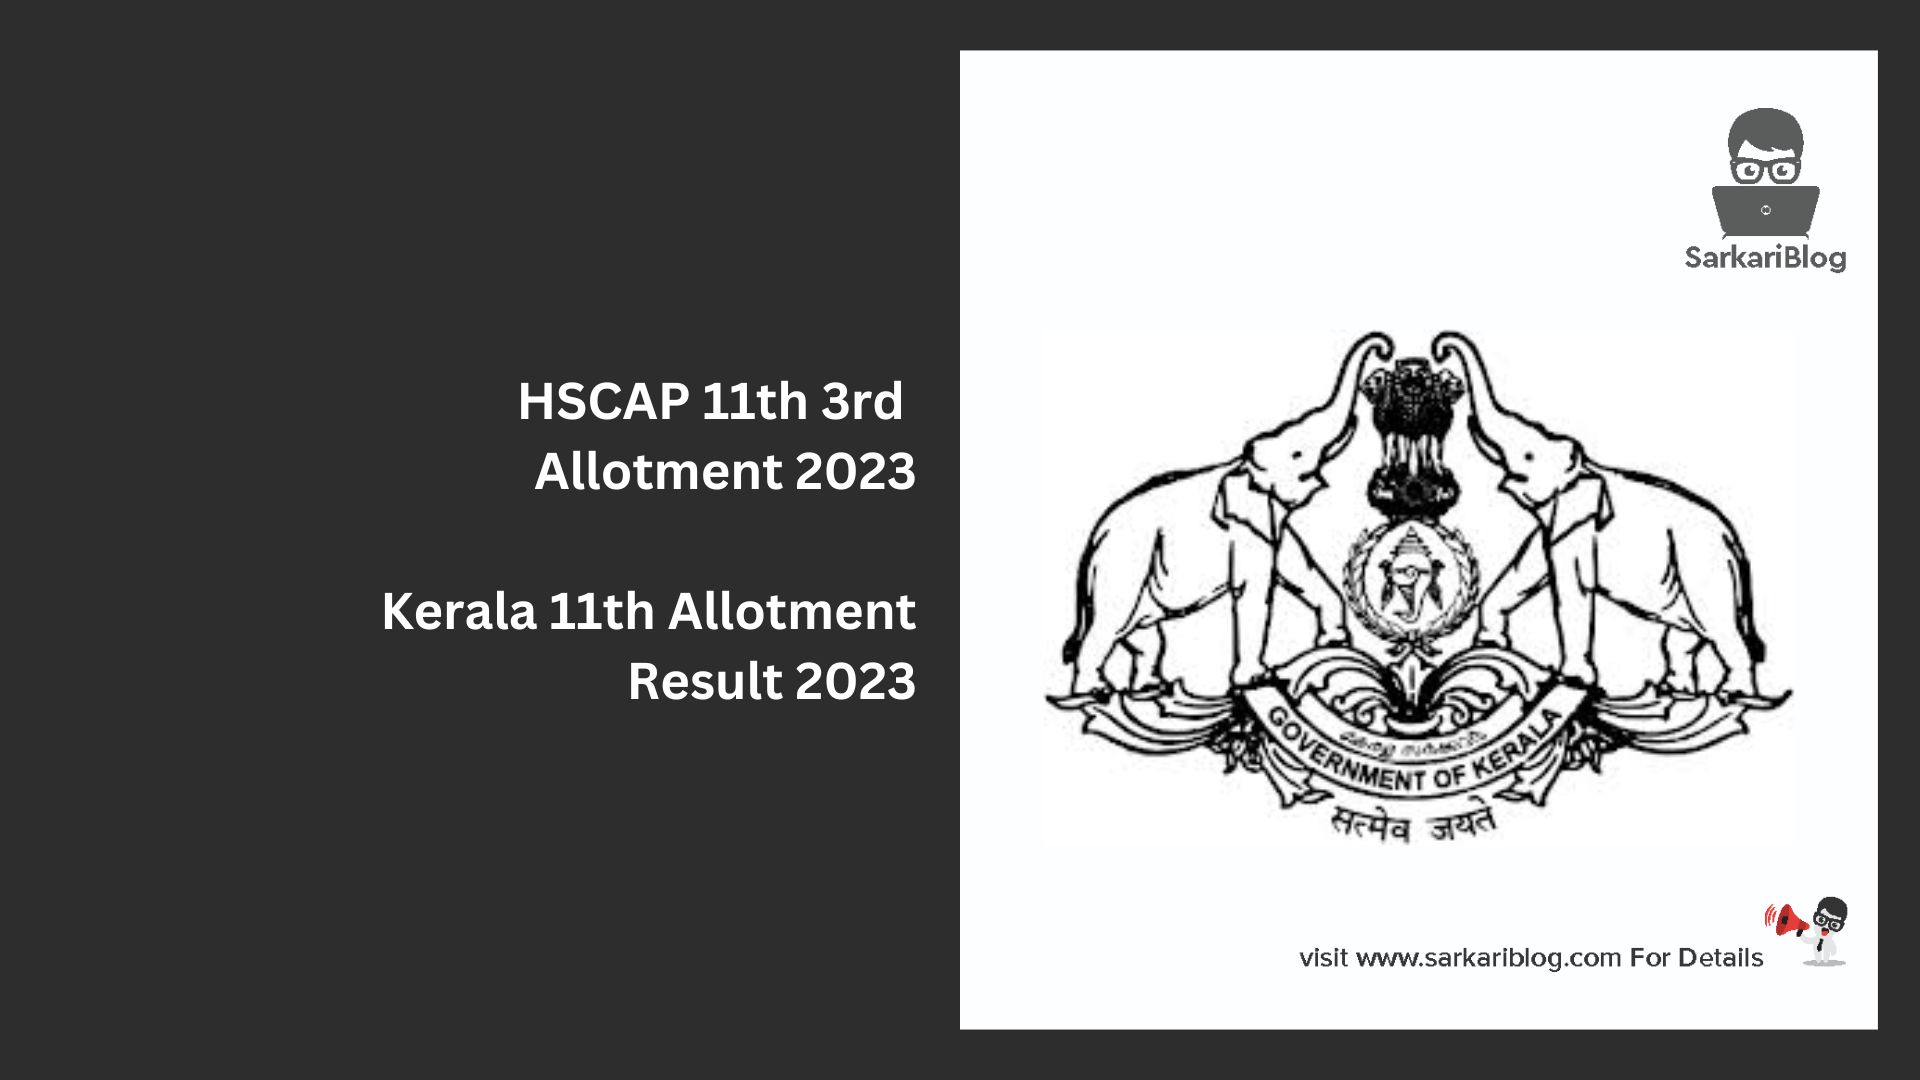 HSCAP 11th 3rd Allotment 2023